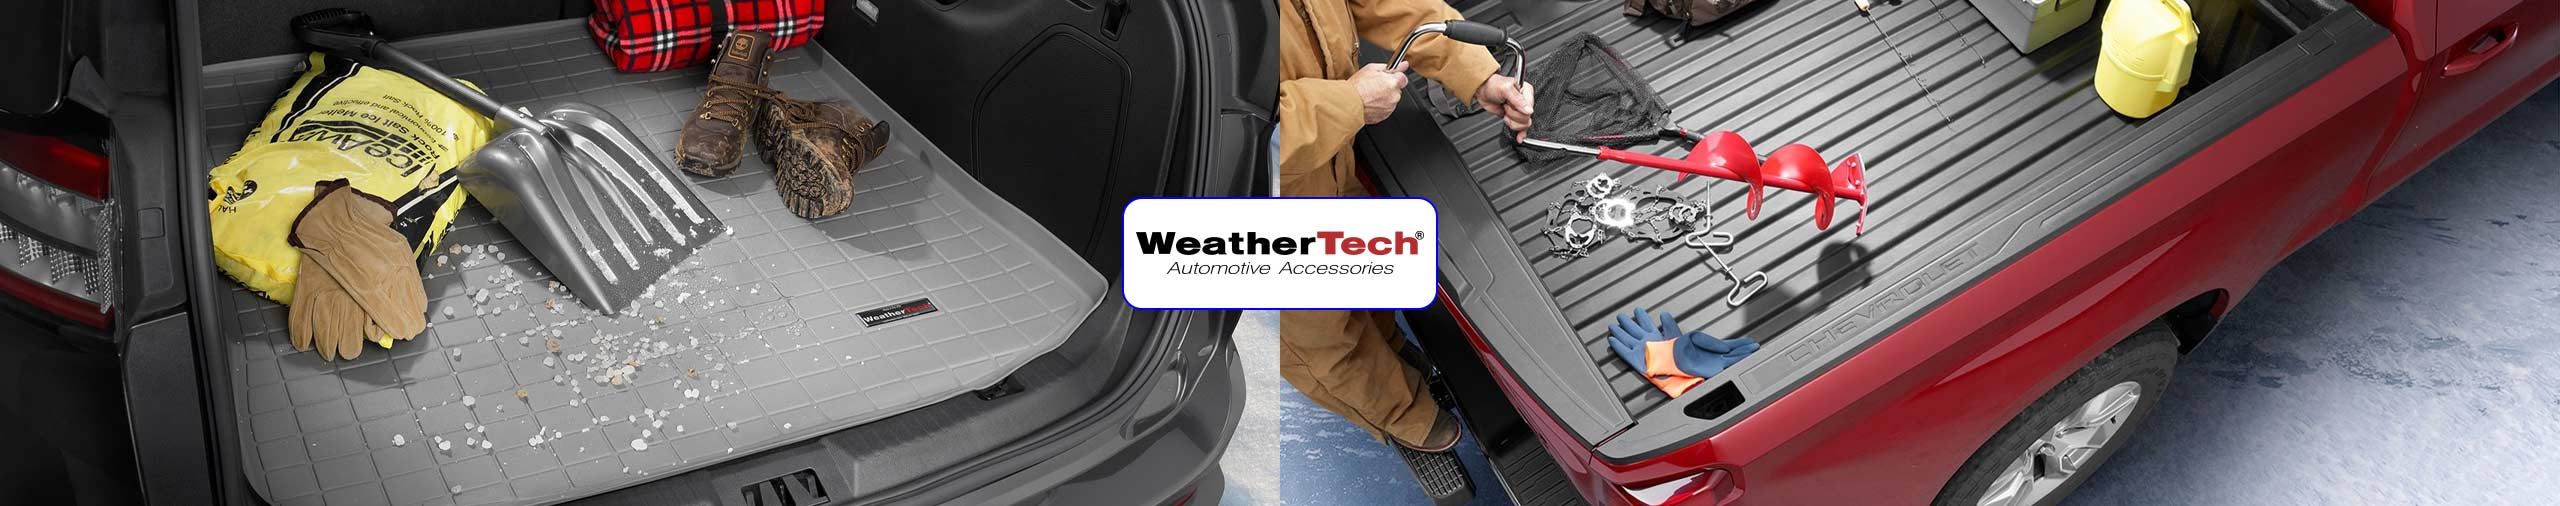 WeatherTech Automotive Accessories